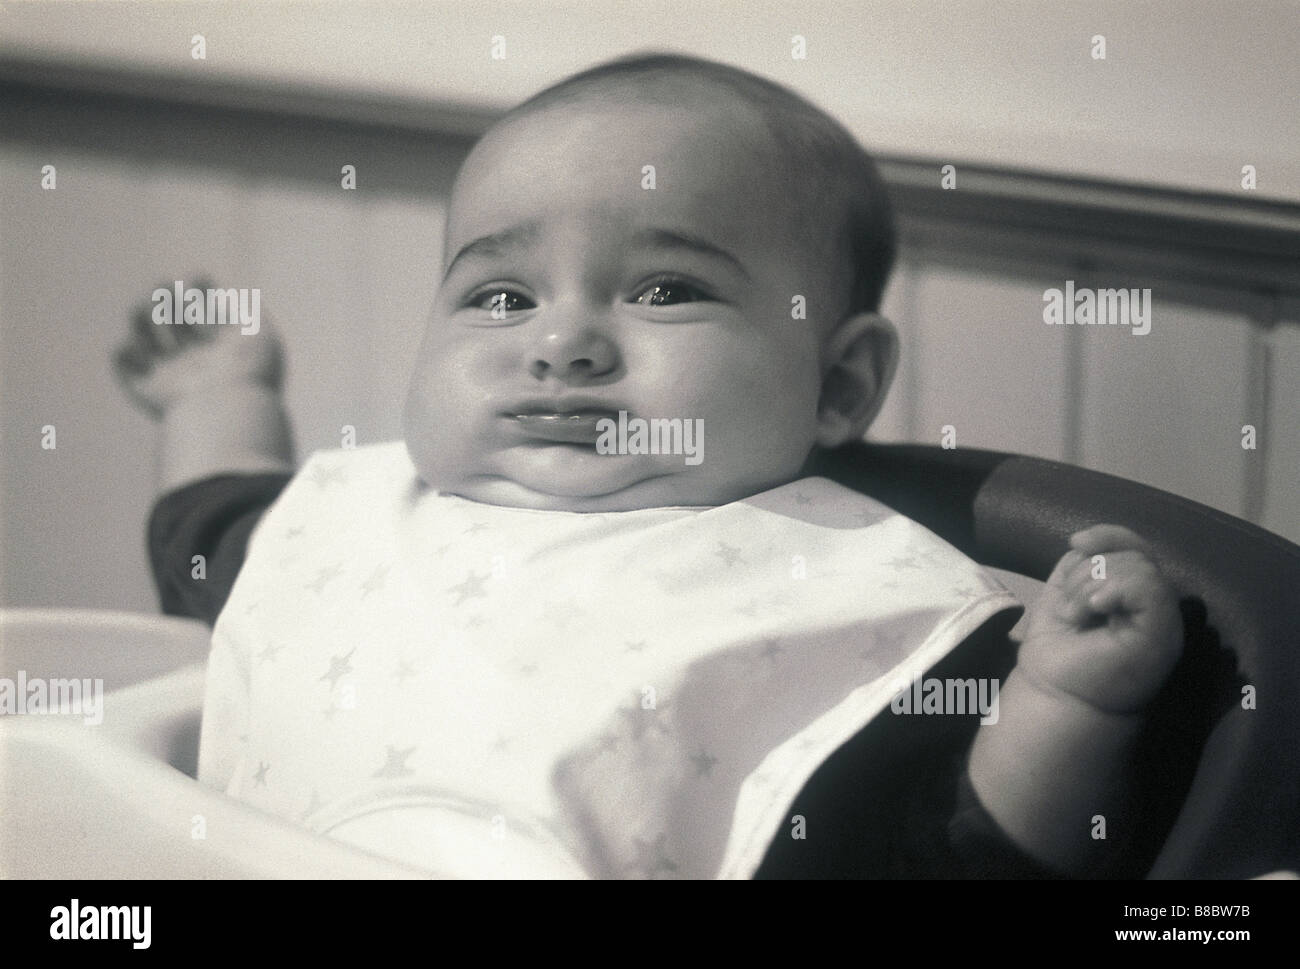 FL4848, Matthew Plexman; Dismayed Baby Highchair, BW Stock Photo